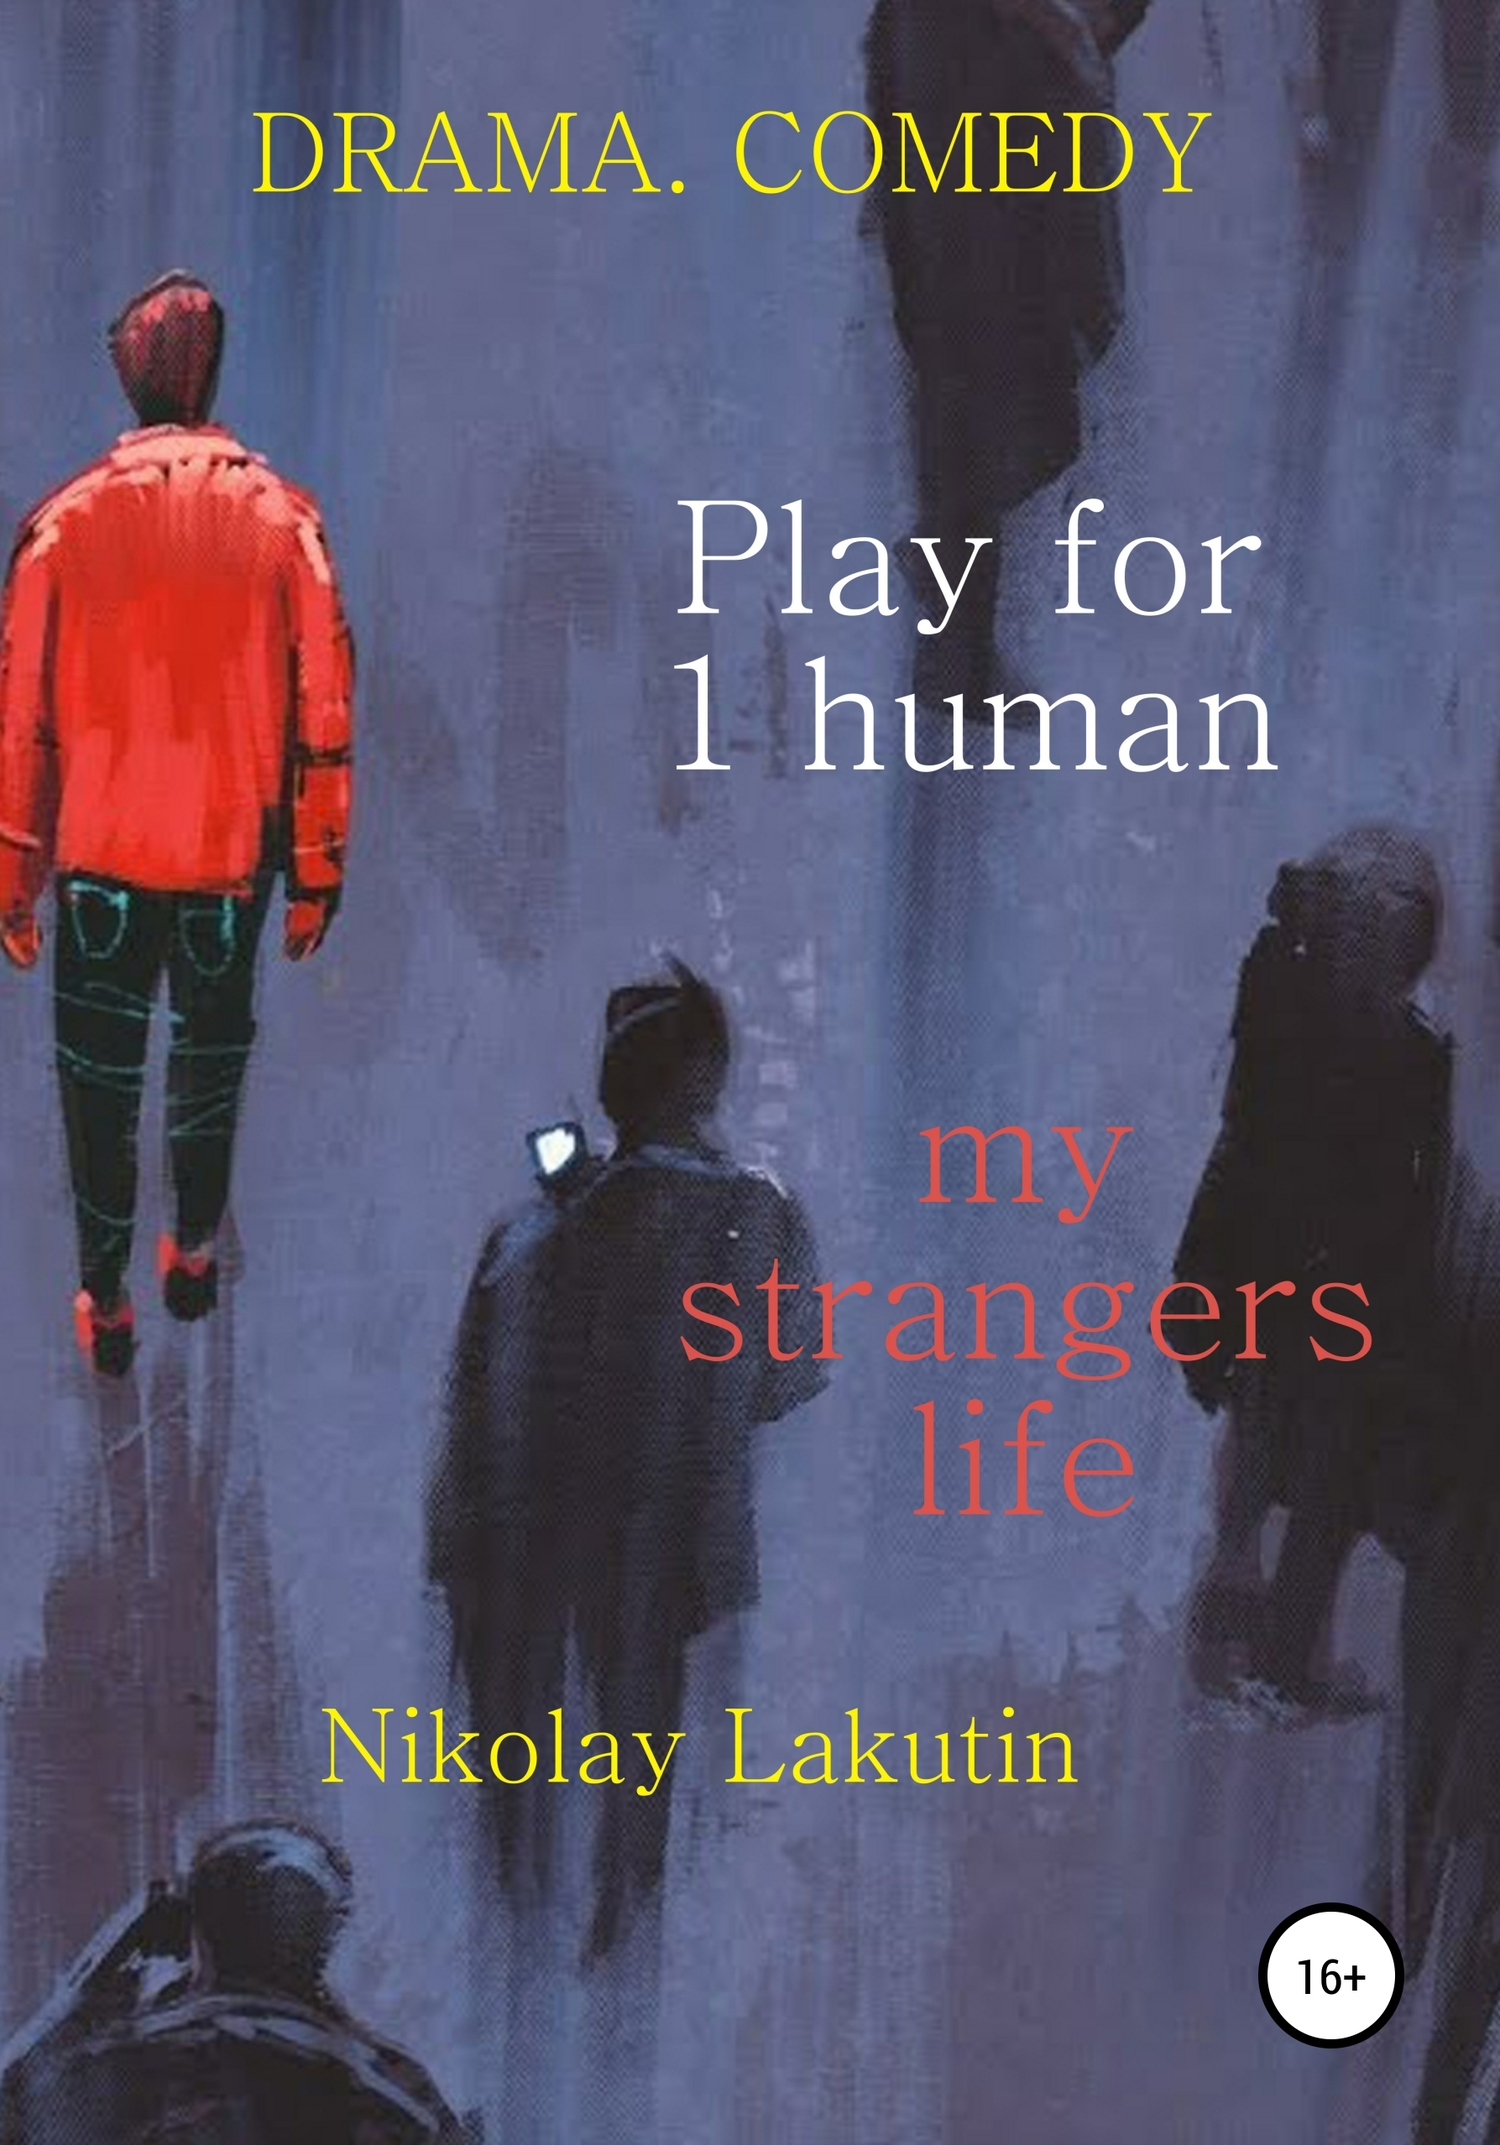 Play for 1 human. My strangers life. DRAMA. COMEDY (fb2)